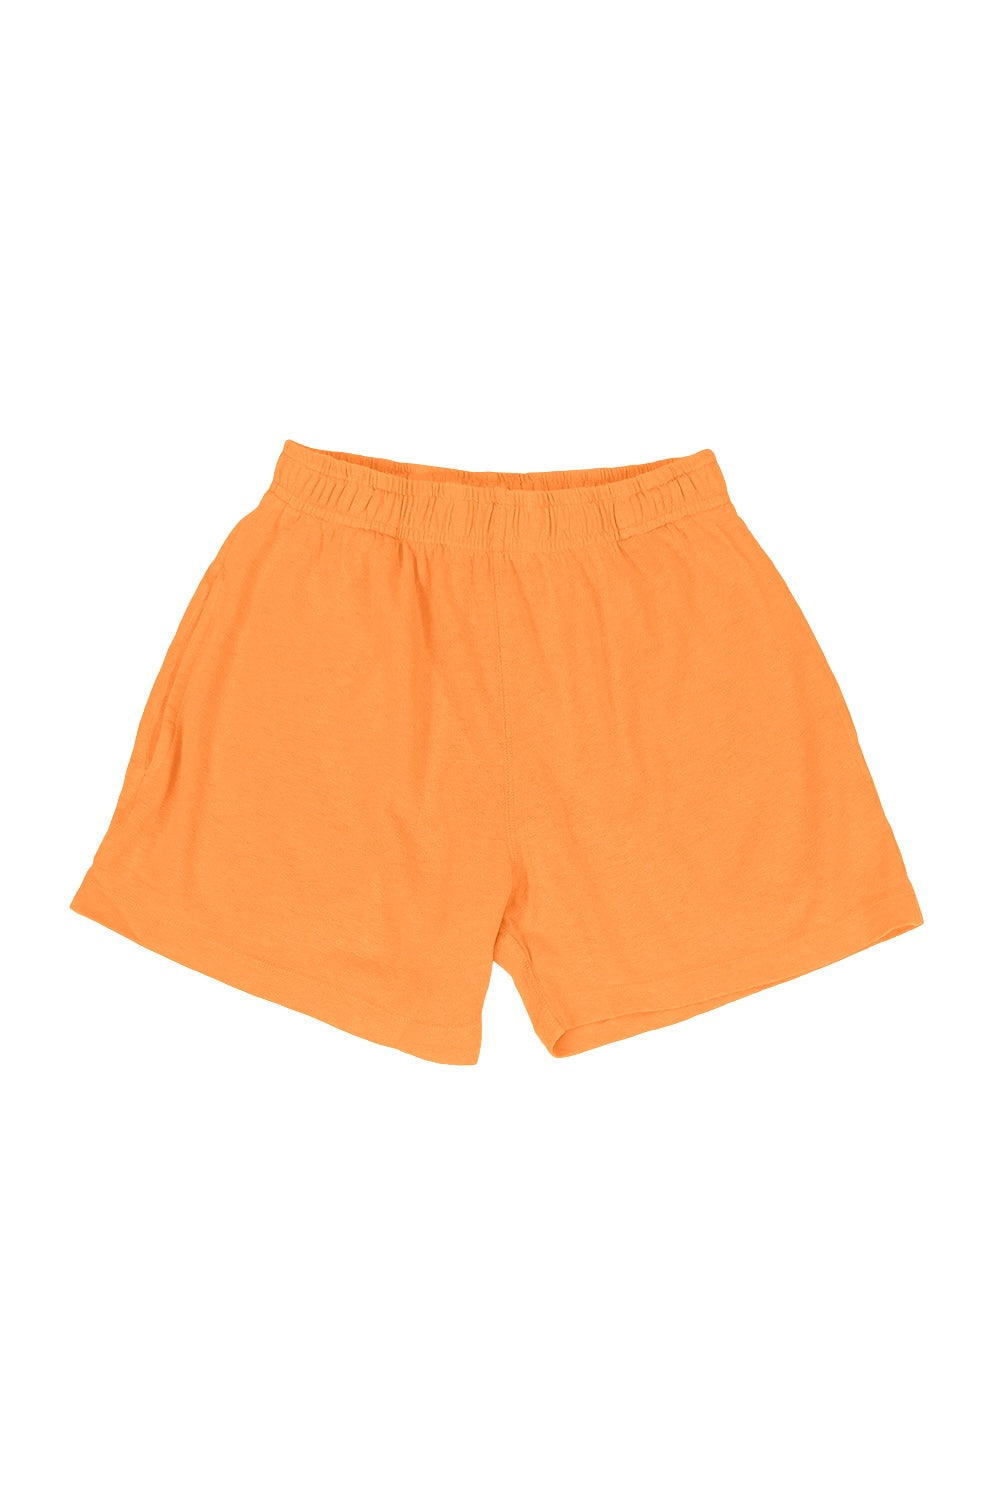 Sun Short | Jungmaven Hemp Clothing & Accessories / Color: Apricot Crush